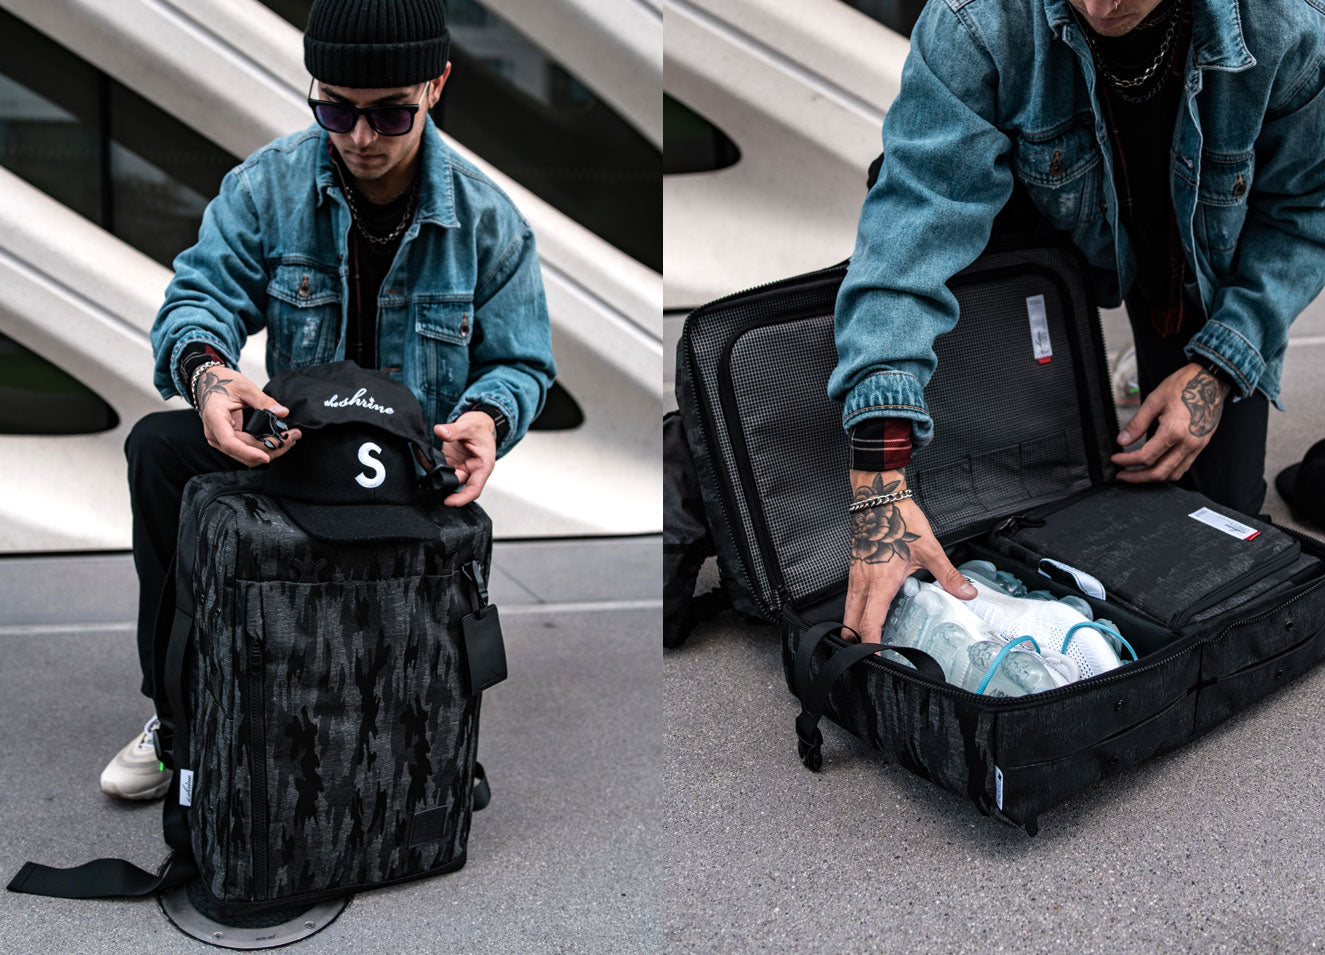 Chicago White Sox Drawstring Backpack Bag Authentic MLB Kids Club SGA